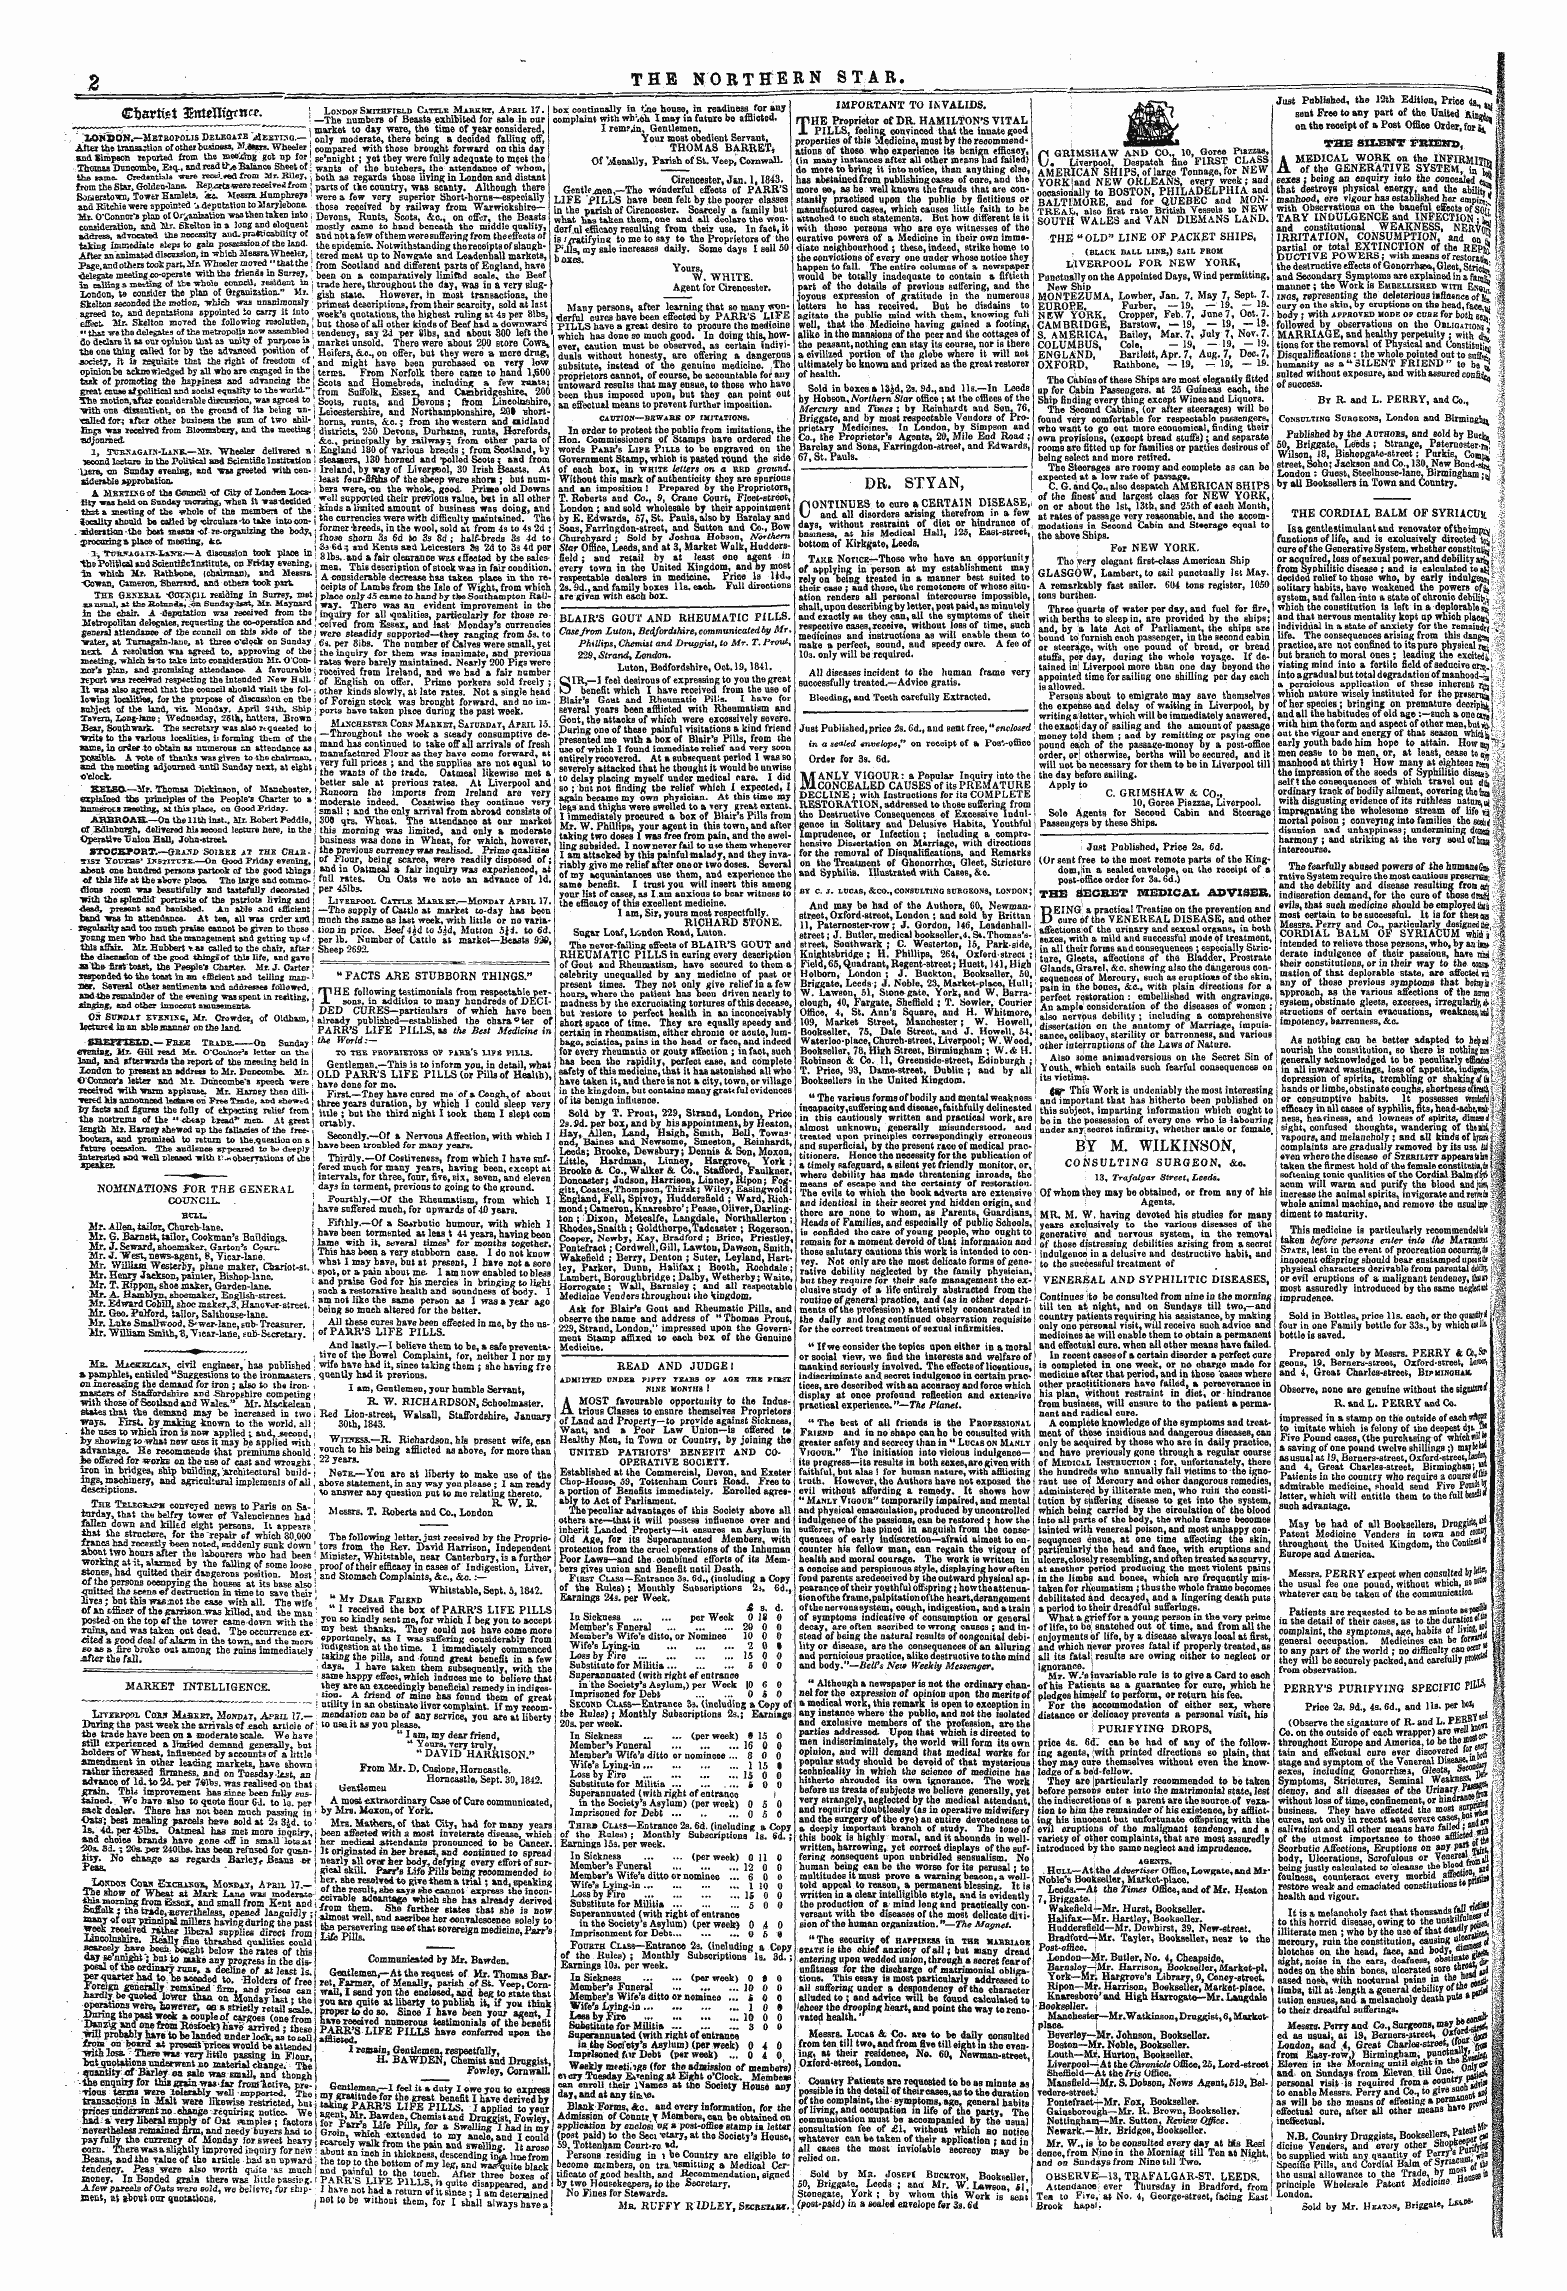 Northern Star (1837-1852): jS F Y, 5th edition: 2